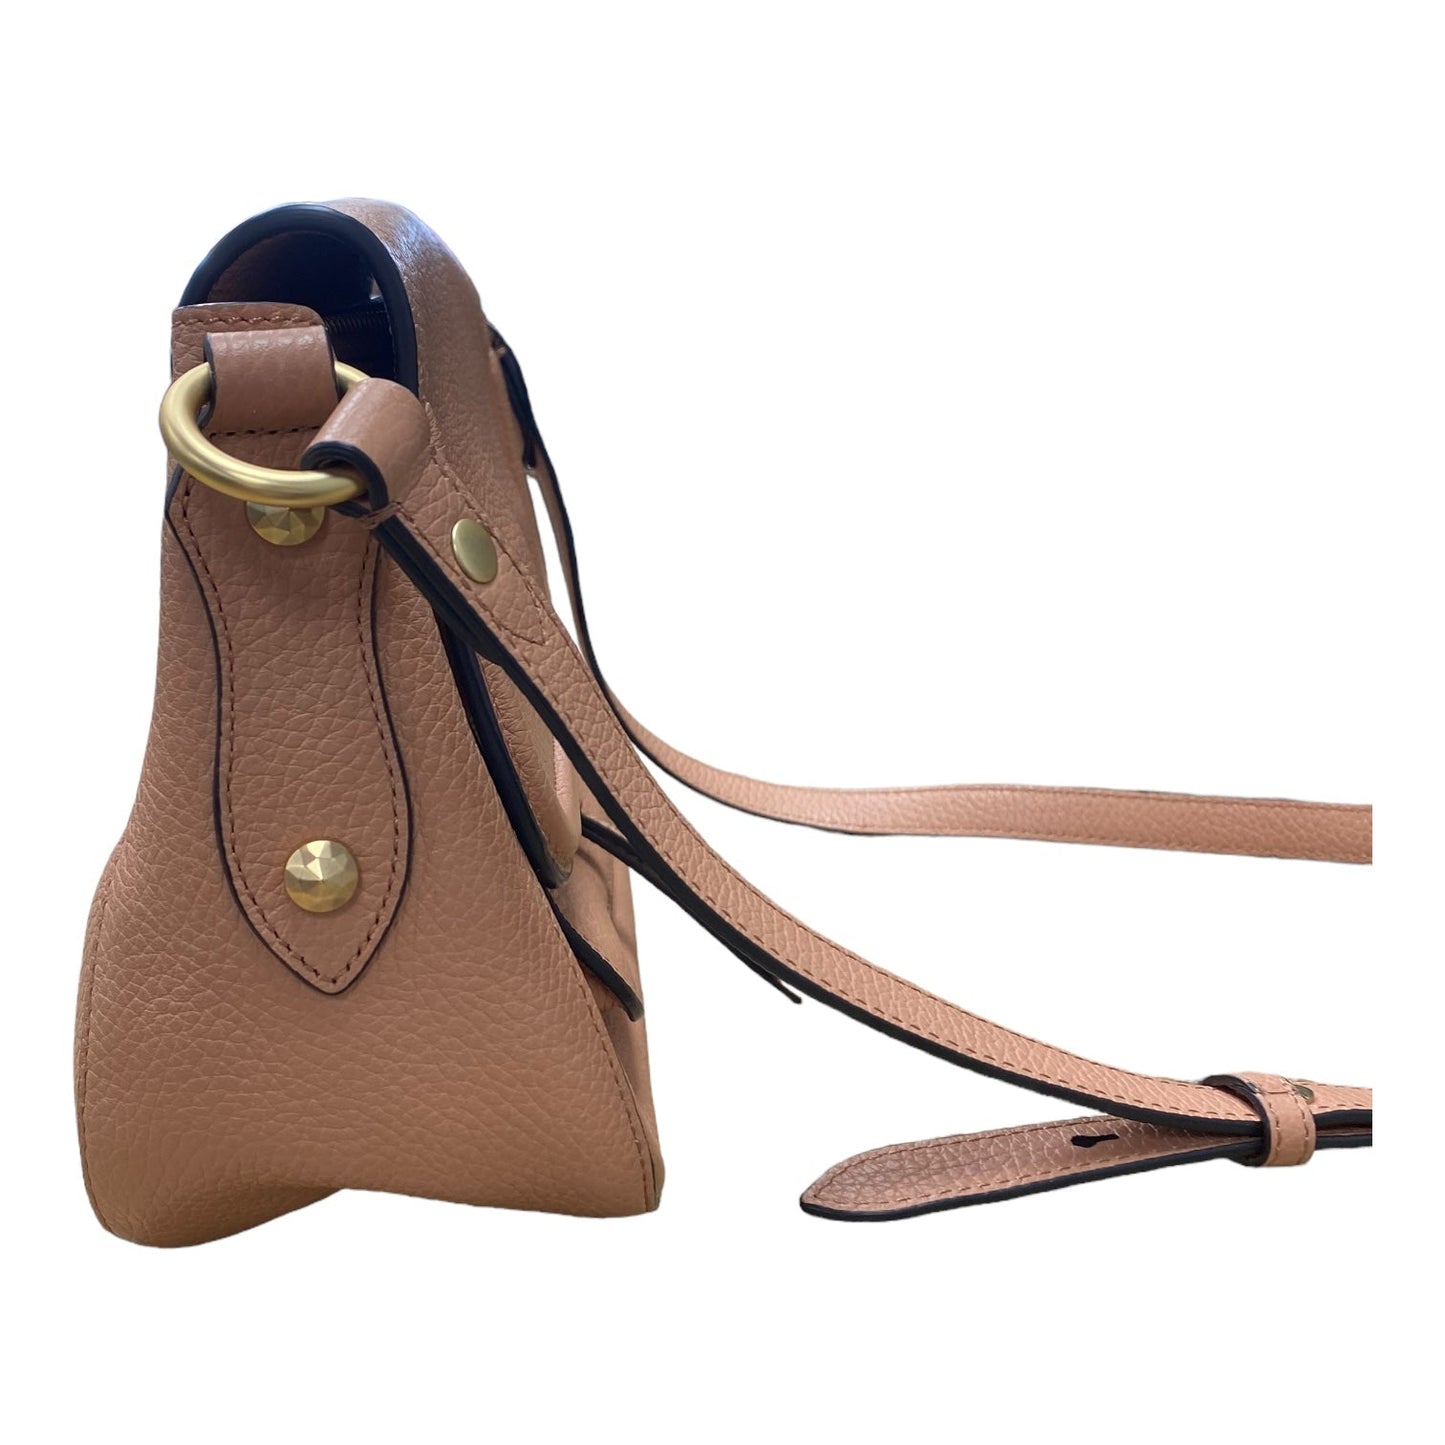 Handbag Designer By Annabel Ingal Size: Small